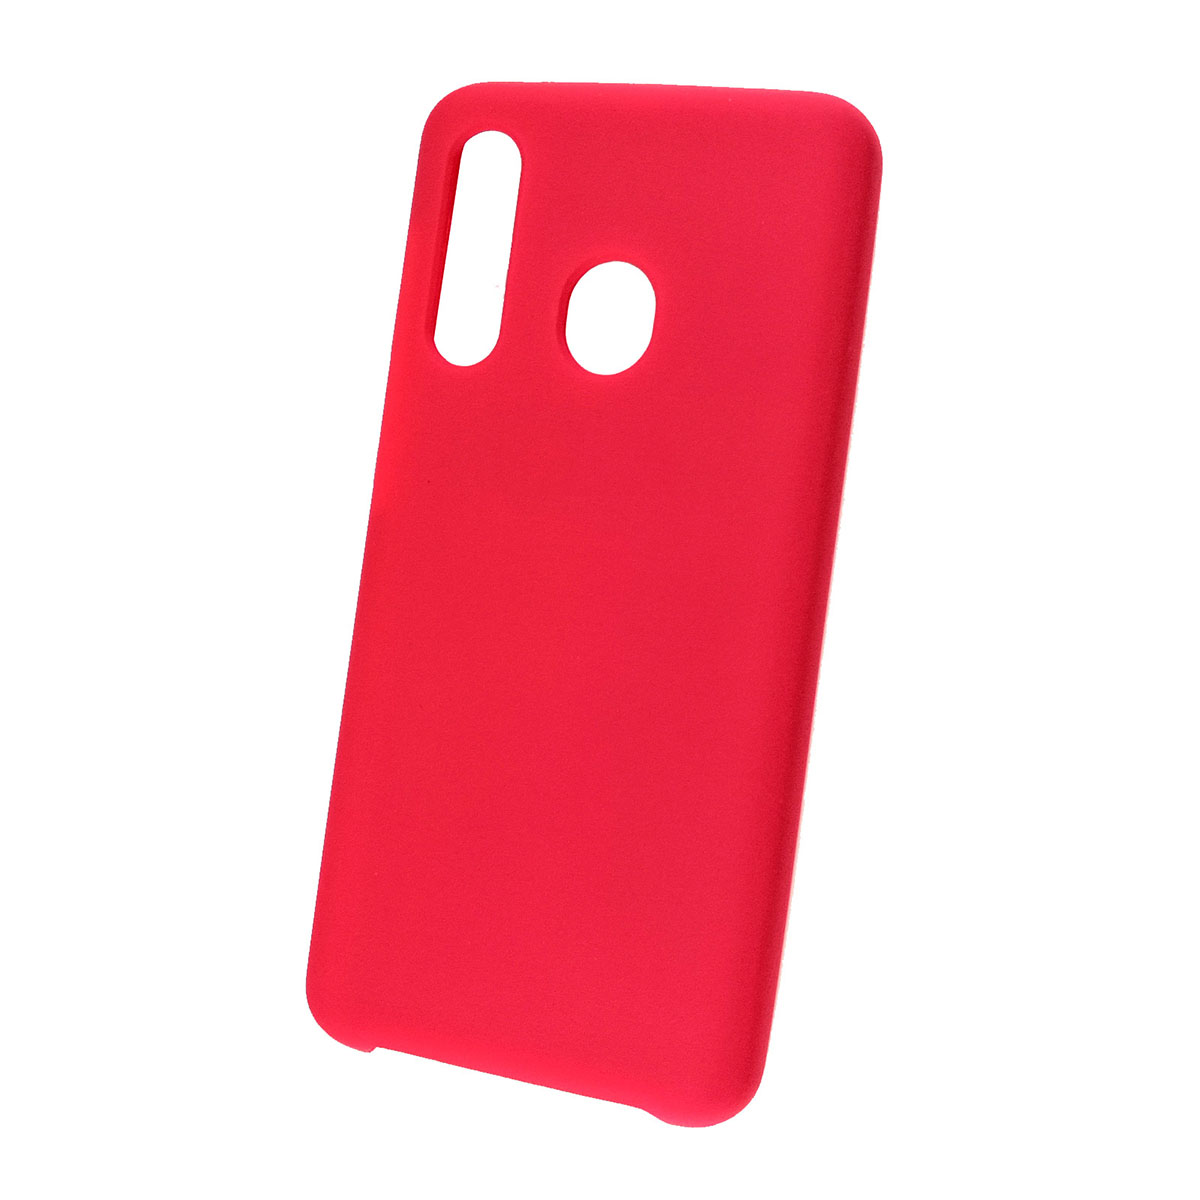 Чехол накладка Silicon Cover для SAMSUNG Galaxy A60 2019 (SM-A605), Galaxy M40 (SM-M405), силикон, бархат, цвет красный